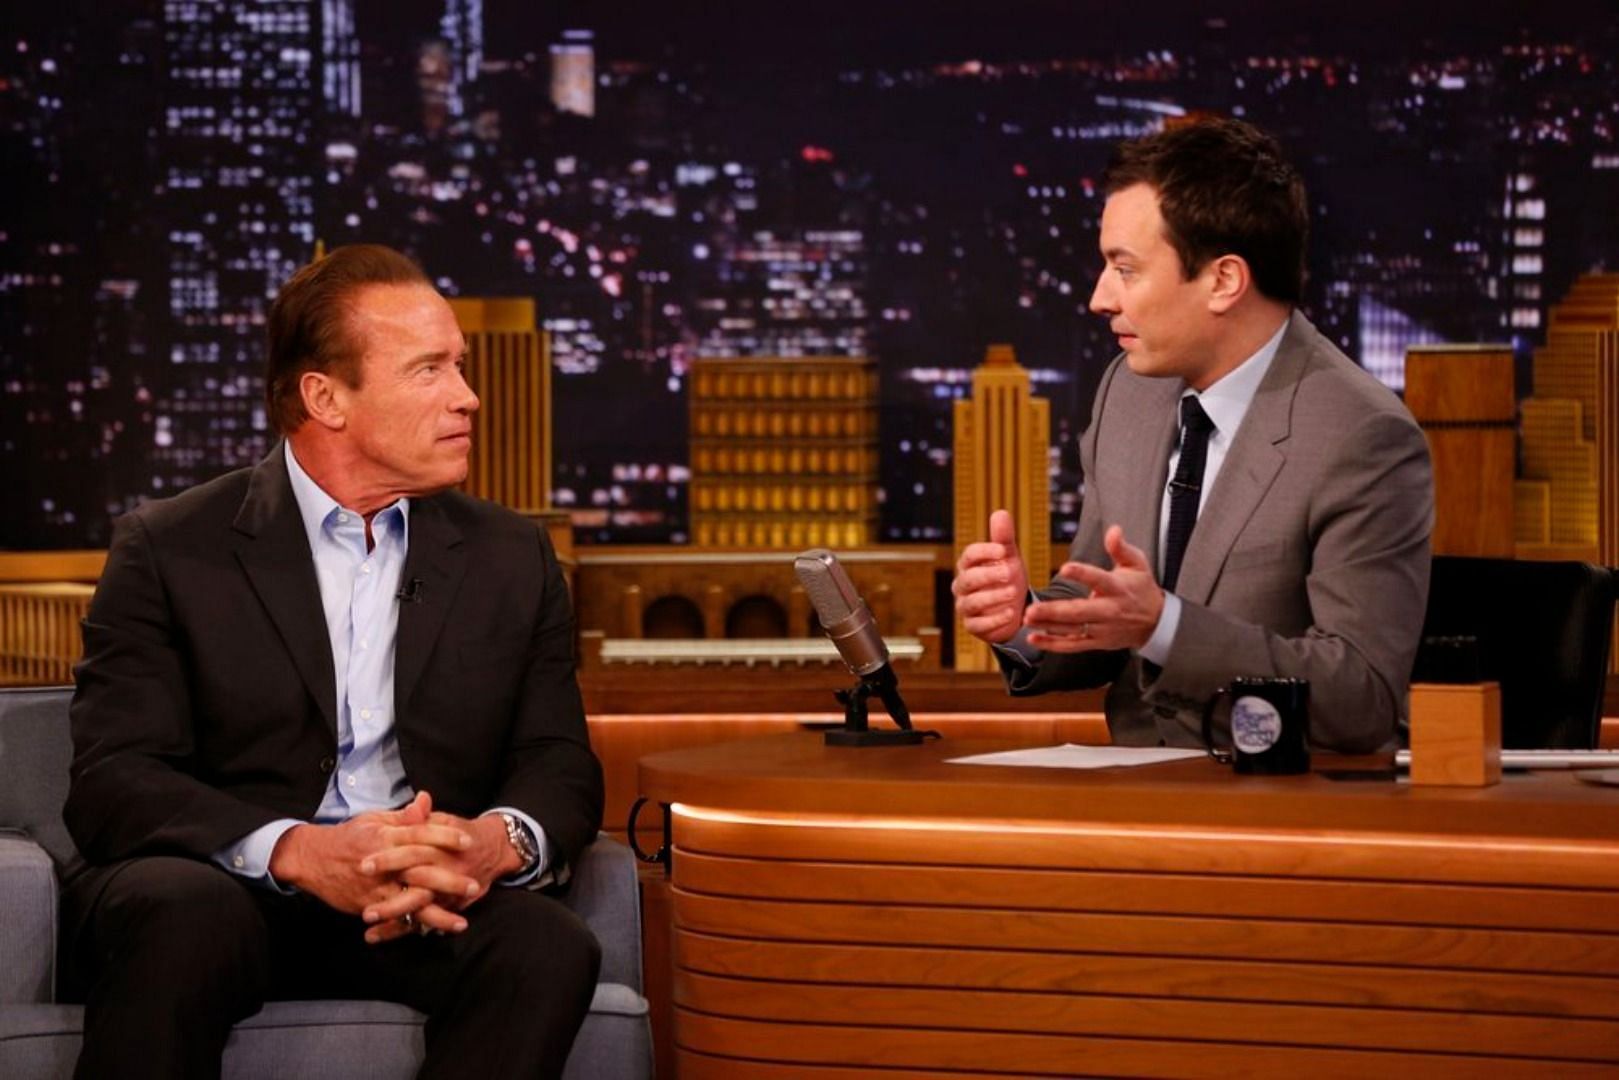 Arnold Schwarzenegger with Jimmy Fallon during The Tonight Show Starring Jimmy Fallon (Image via CBS News)